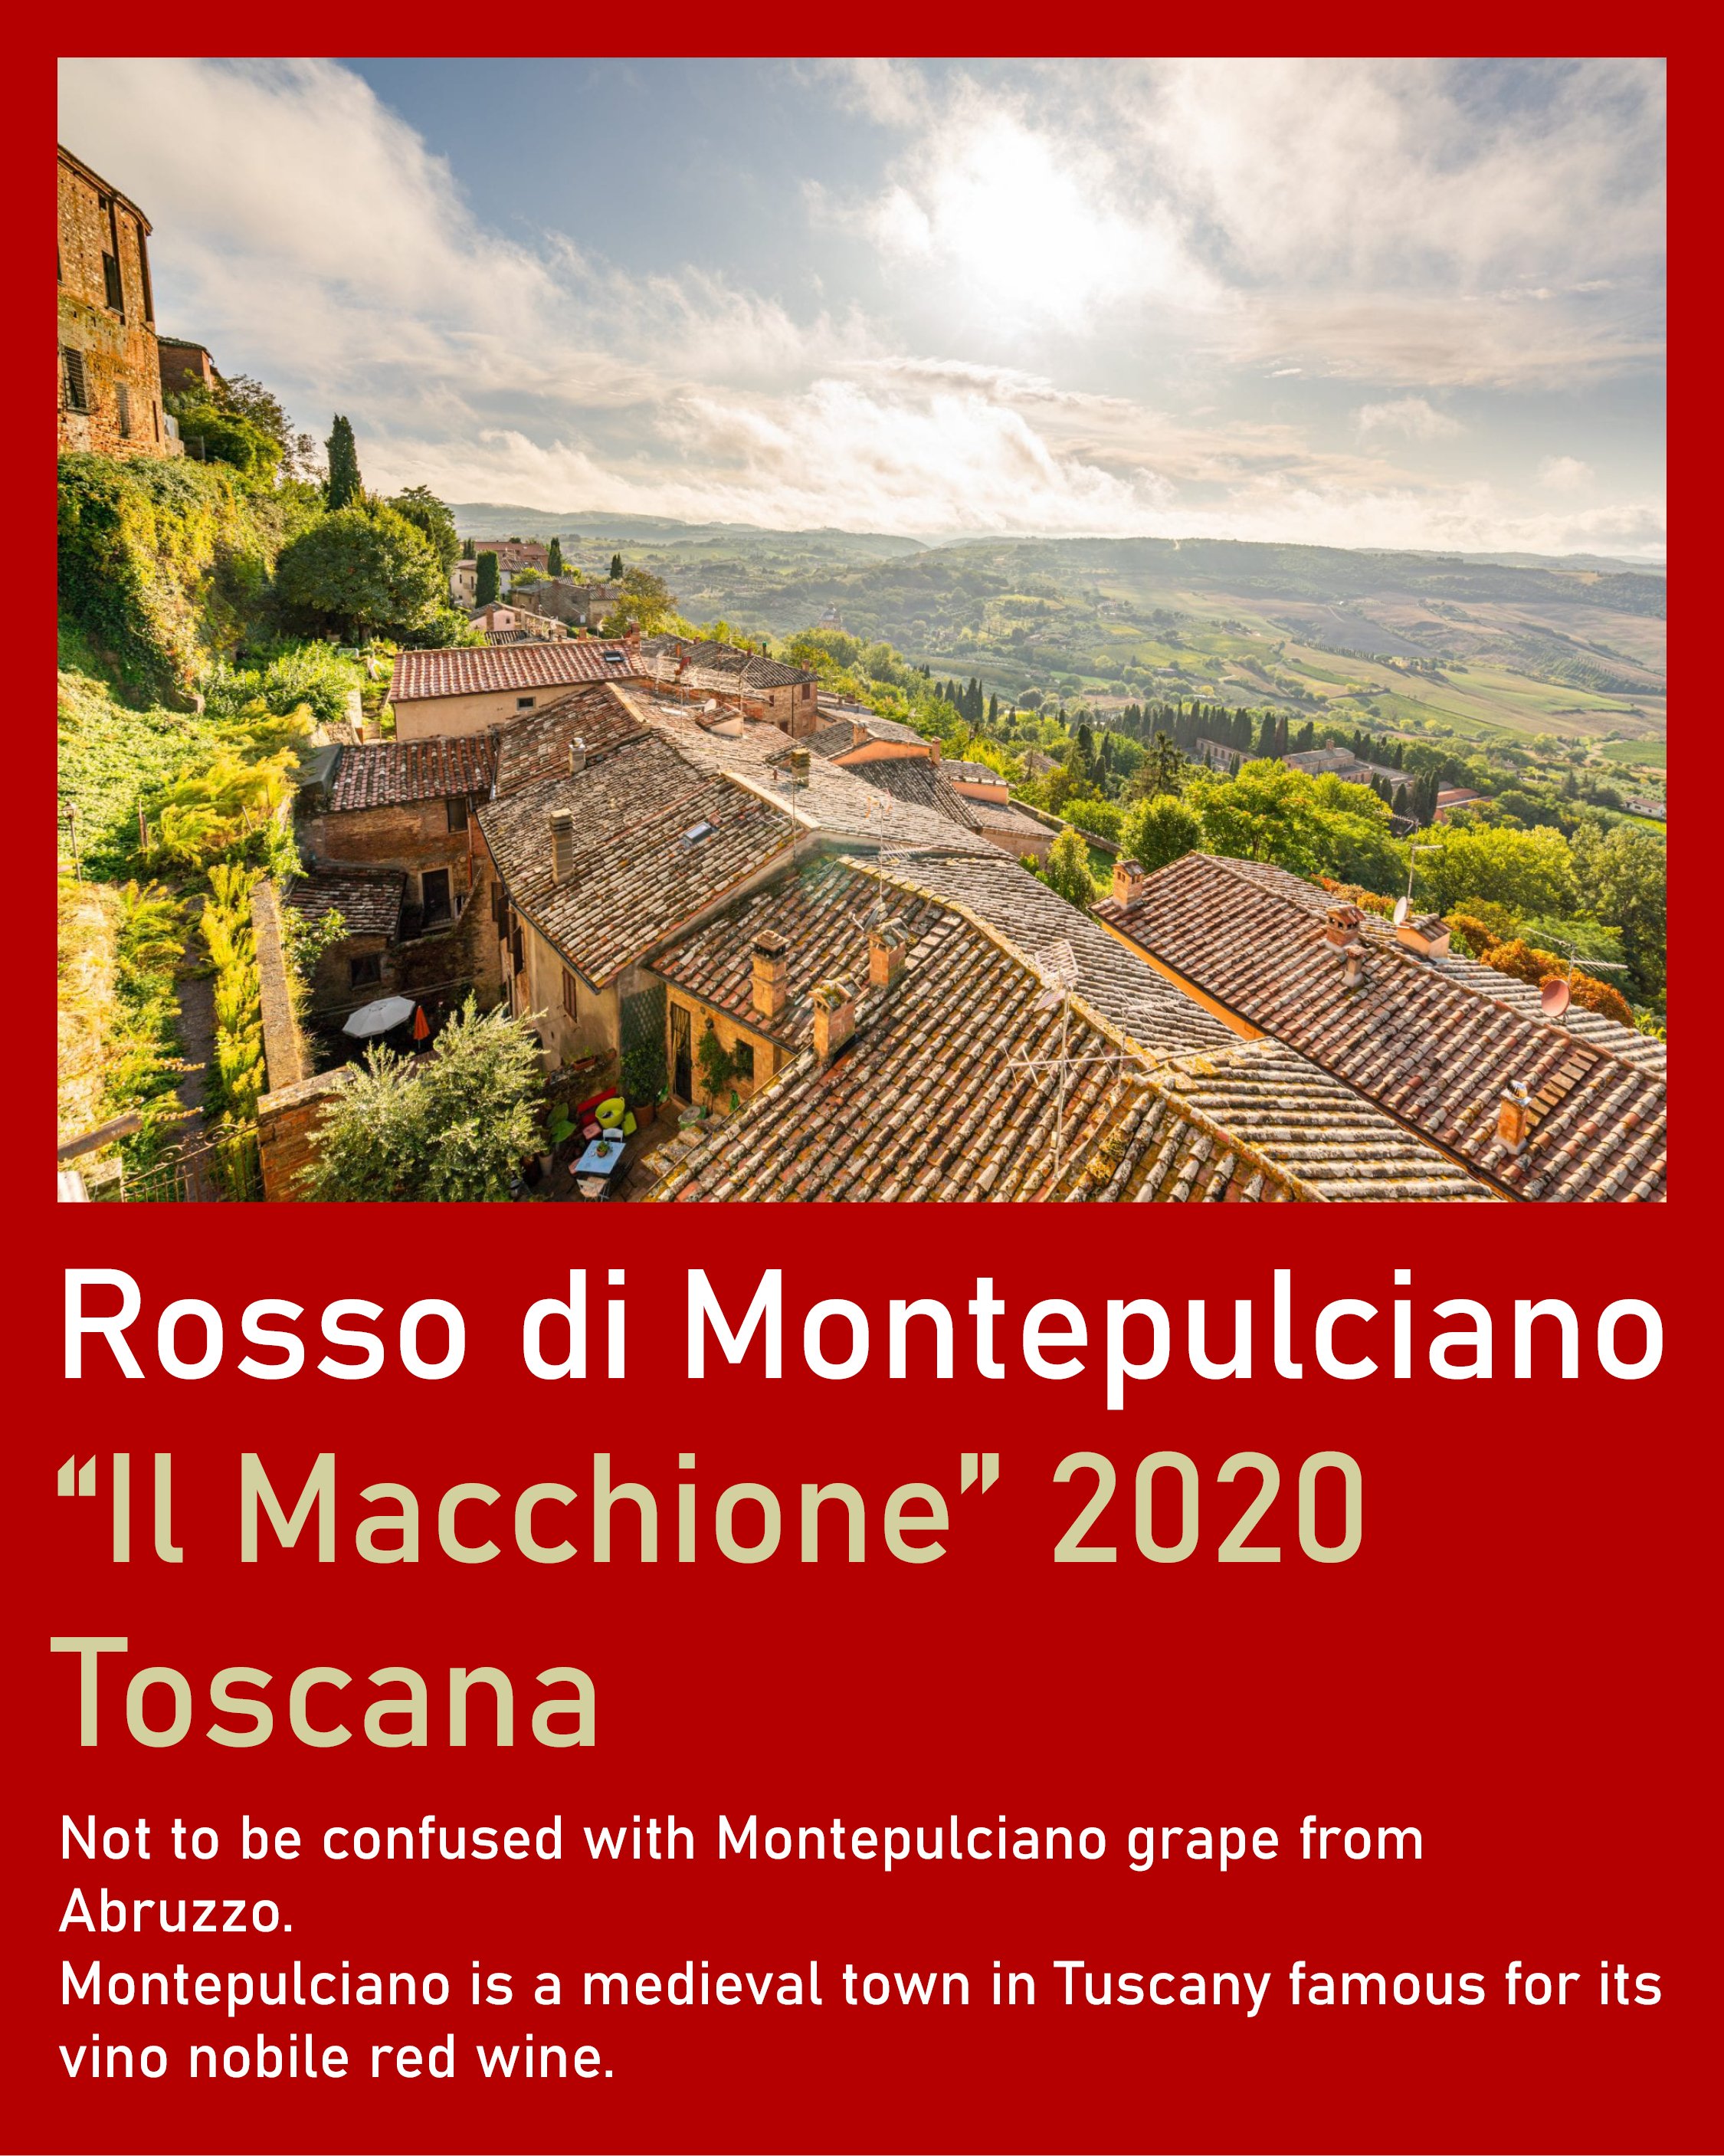 Rosso di Montepulciano Infographic2.jpg